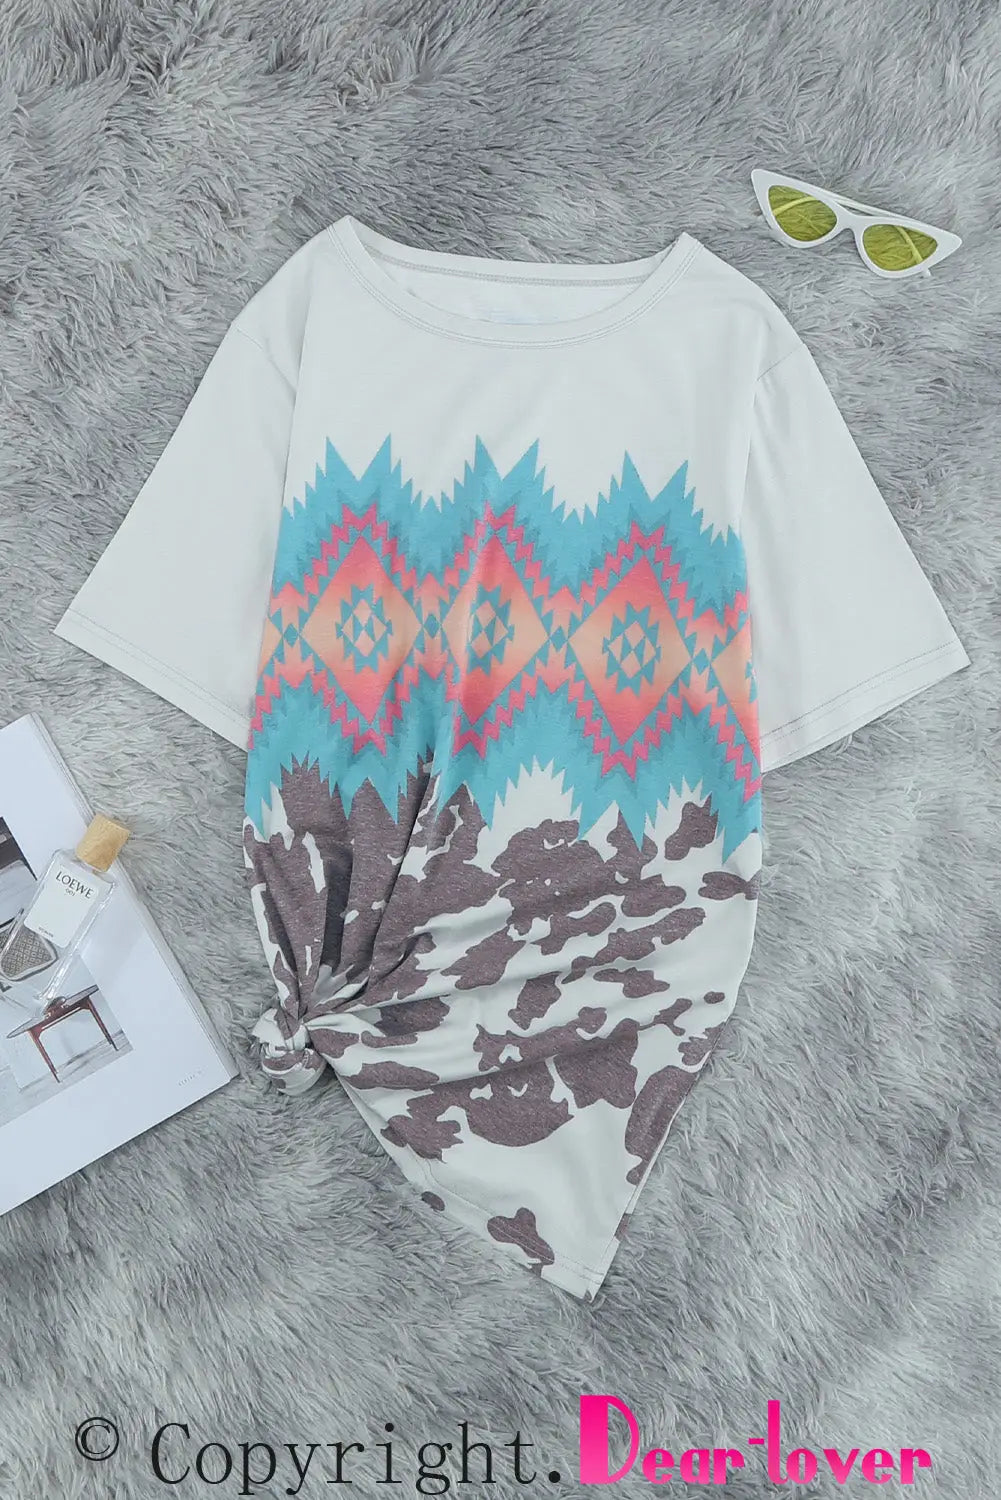 Multi-color aztec geometric print t-shirt - t-shirts